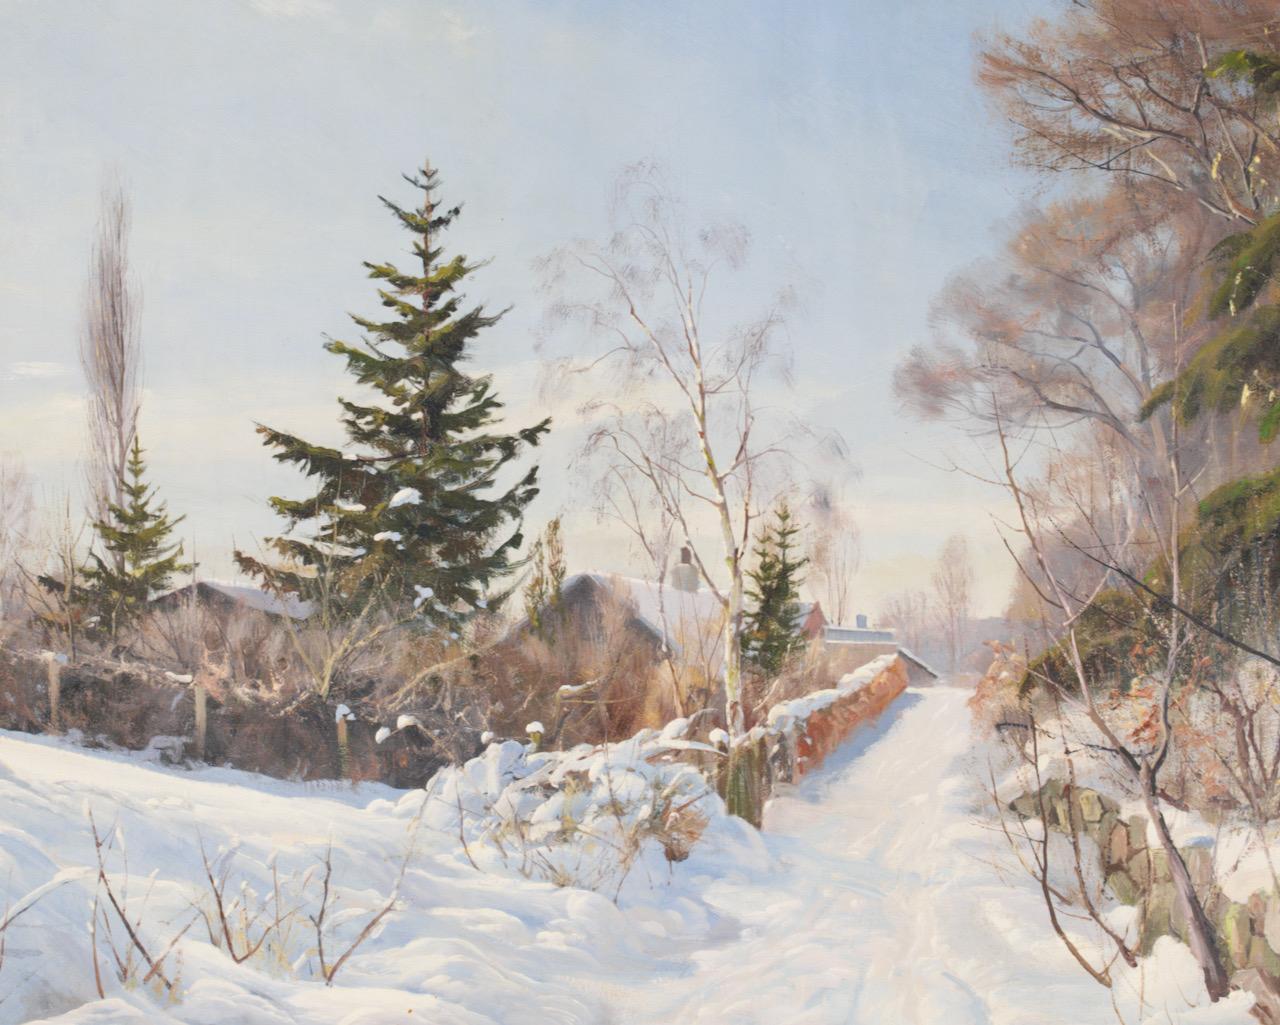 Charming winter-landscape by Harald Pryn (1891 - 1968), signed and dated 1949
With frame:
H. 125 W. 160 D. 8 cm
H. 49.2 W. 62.9 D. 3.1 in
Without frame:
H. 100 W. 134 D. 2 cm
H. 39.3 W. 52.7 D. 0.7 in.